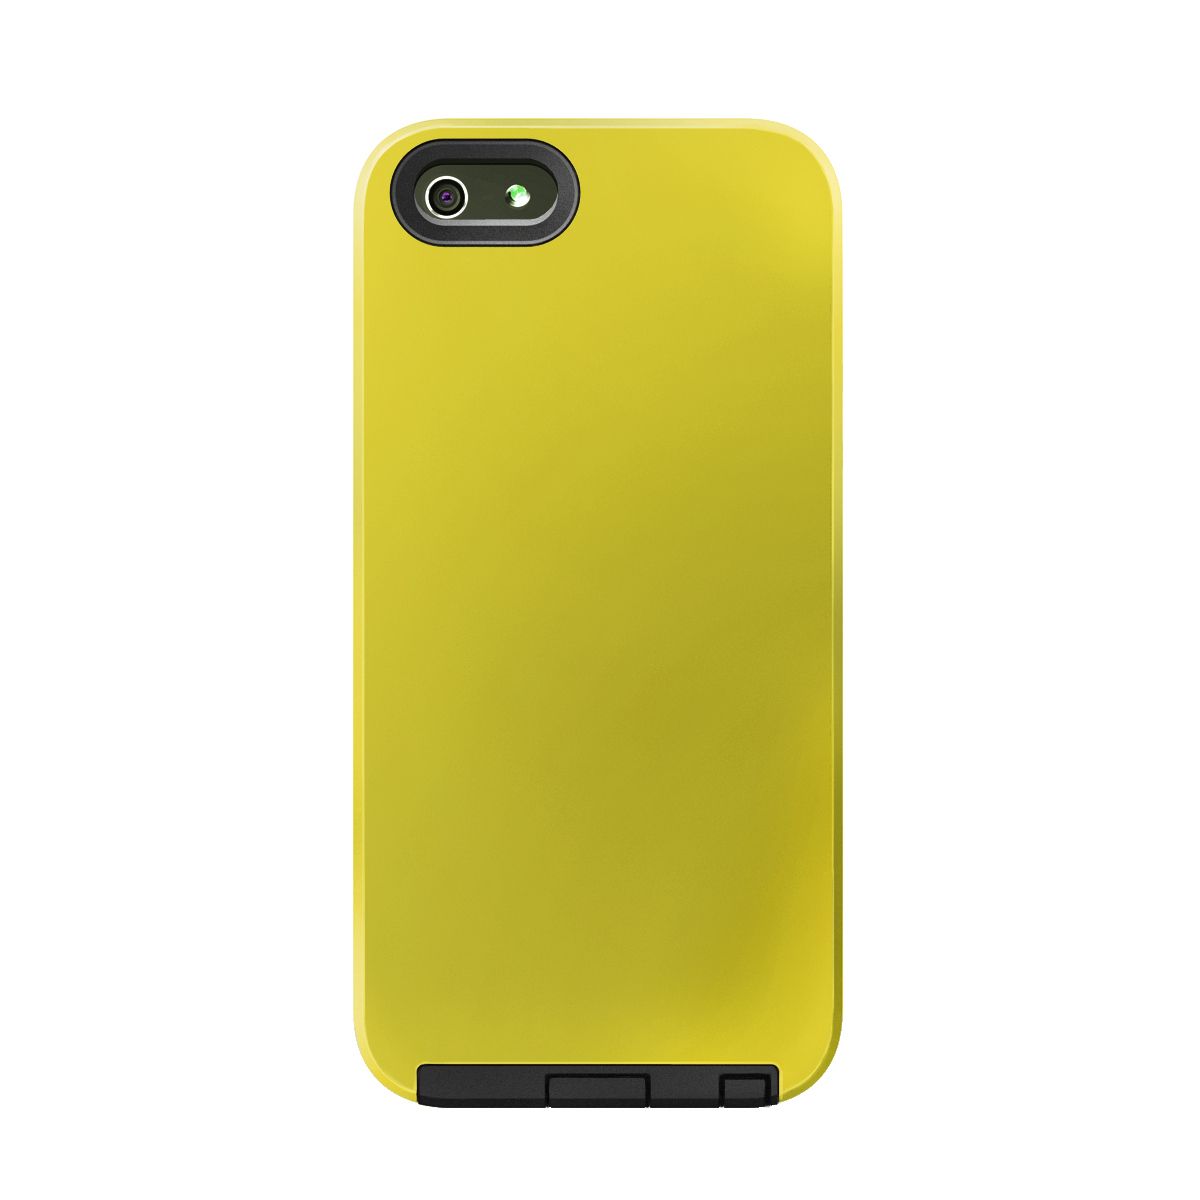 Acase Superleggera Pro Dual Layer Case Cover Skin for Apple iPhone 5